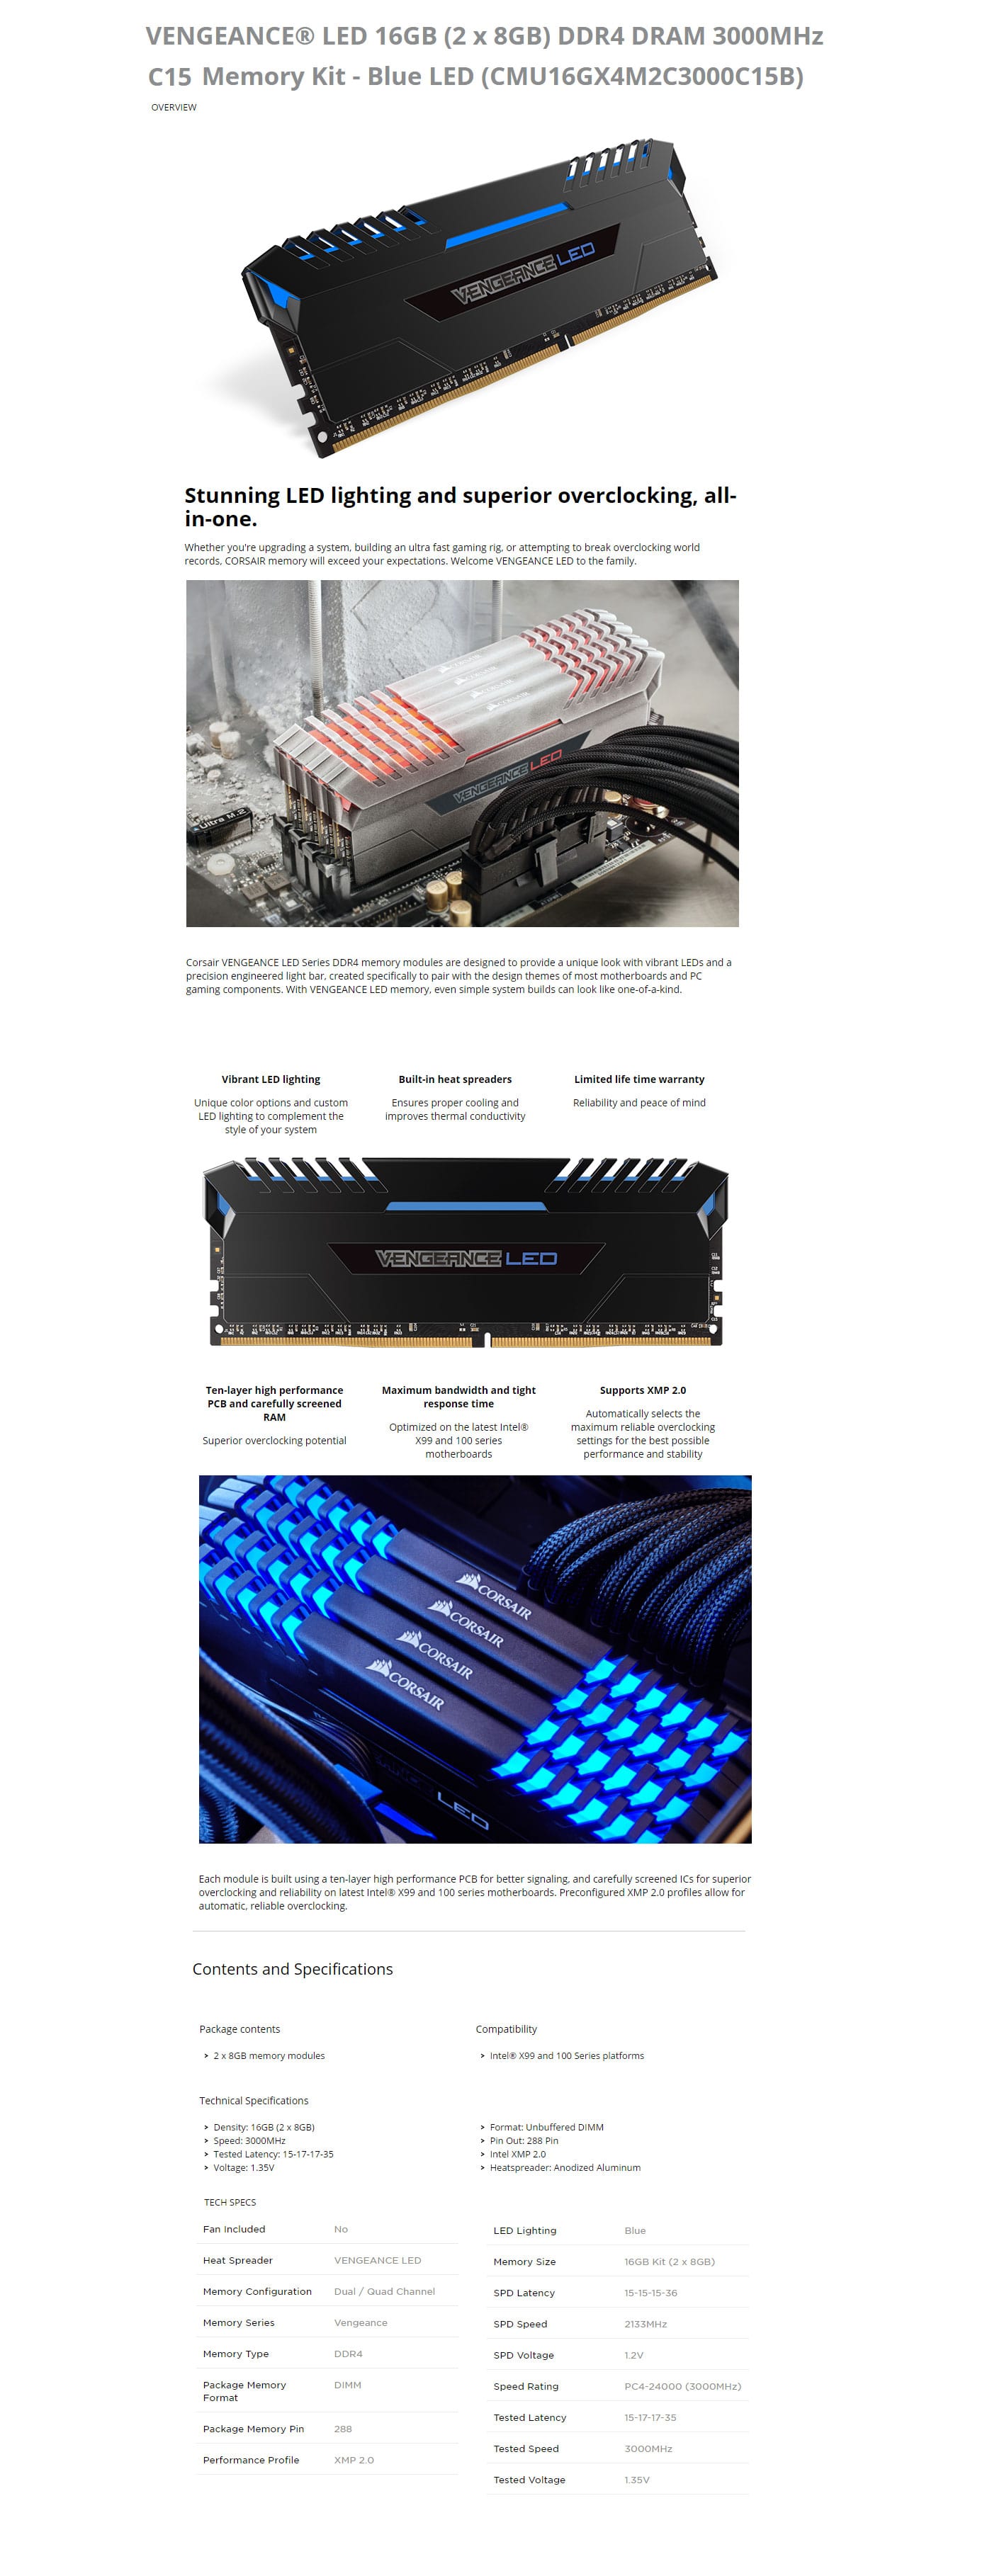 Corsair Vengeance LED 16GB (2 x 8GB) DDR4 DRAM 3000MHz C15 Memory Kit Blue LED features